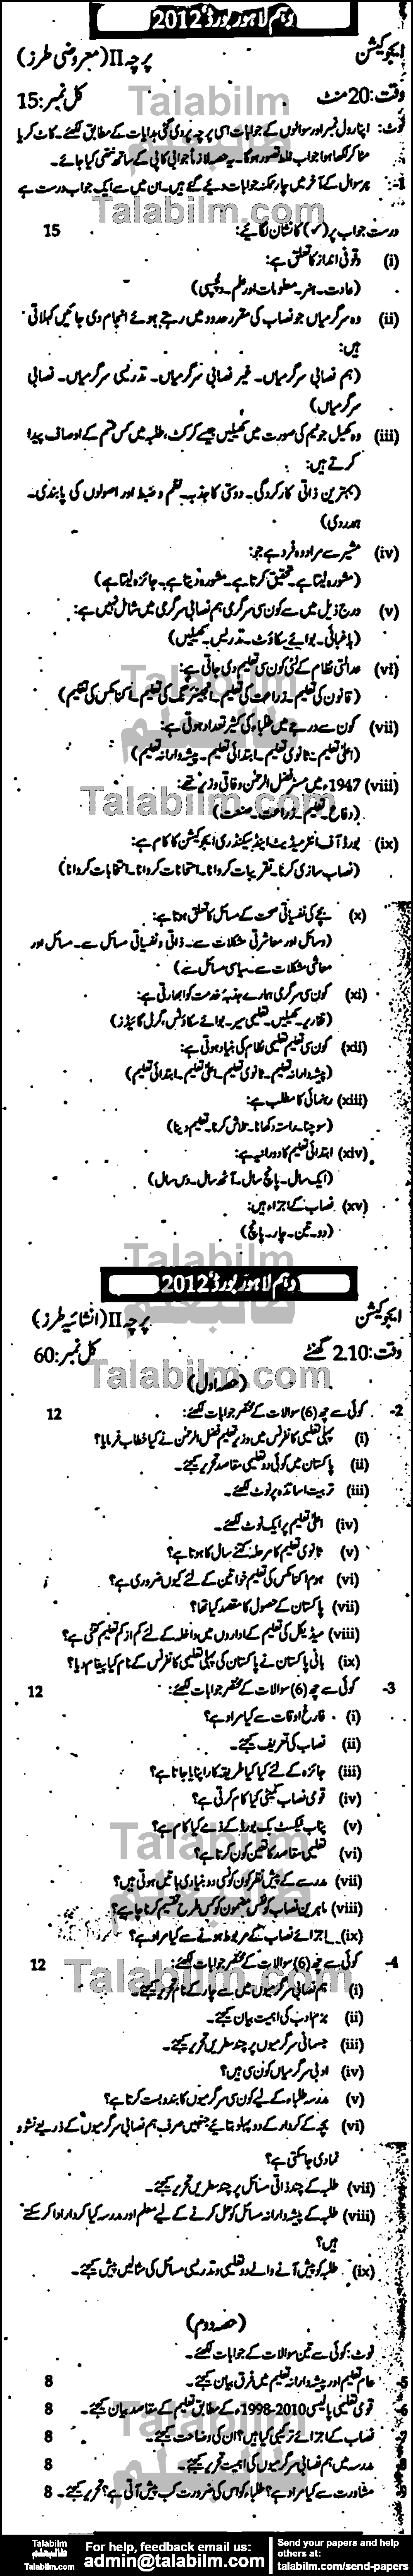 Education 0 past paper for Urdu Medium 2012 Group-I